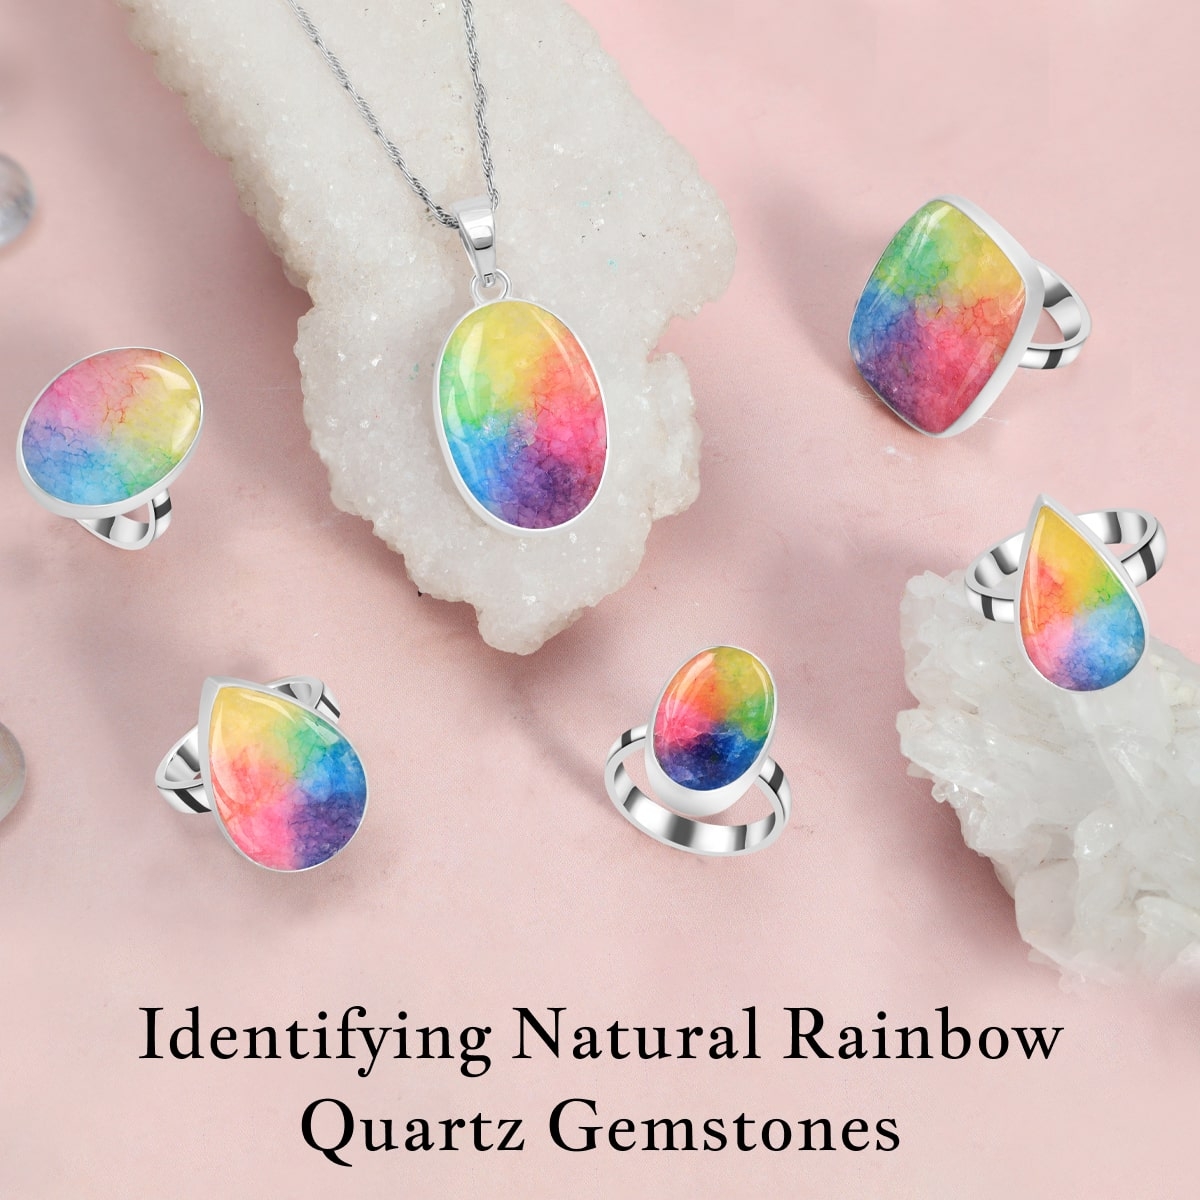 Is Rainbow Quartz Considered a Natural Gemstone